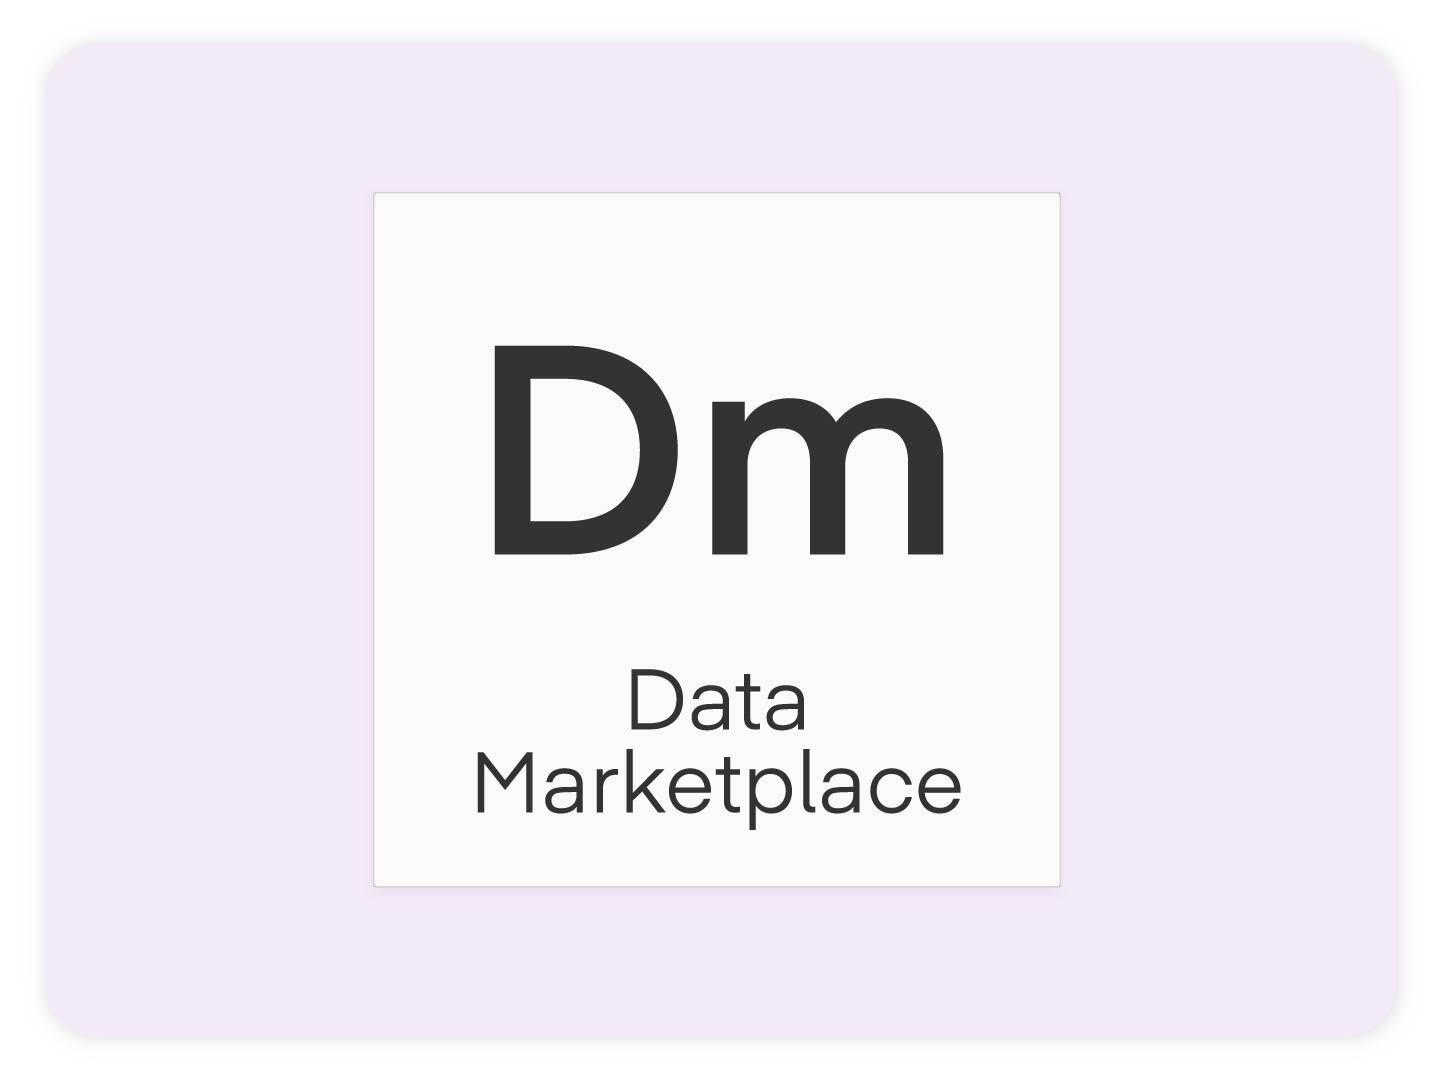 Cm - Data Marketplace